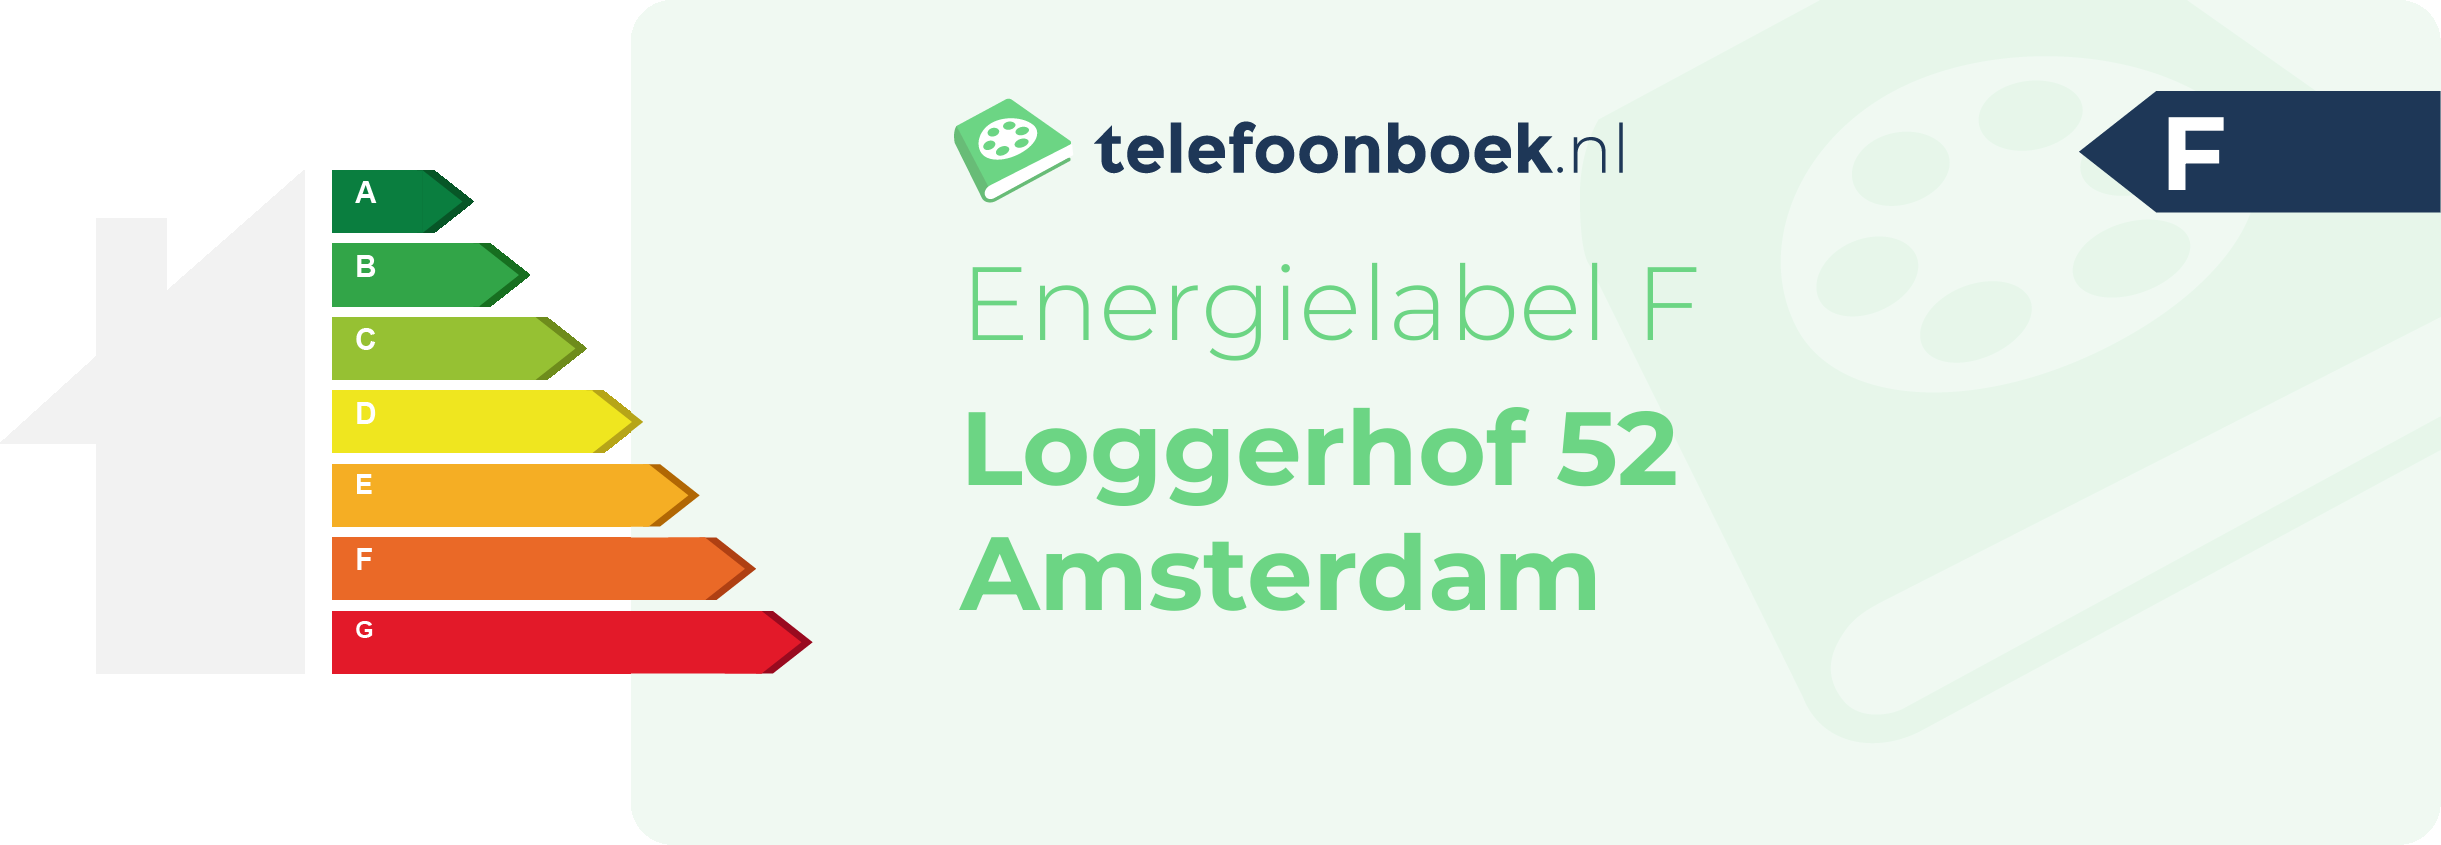 Energielabel Loggerhof 52 Amsterdam